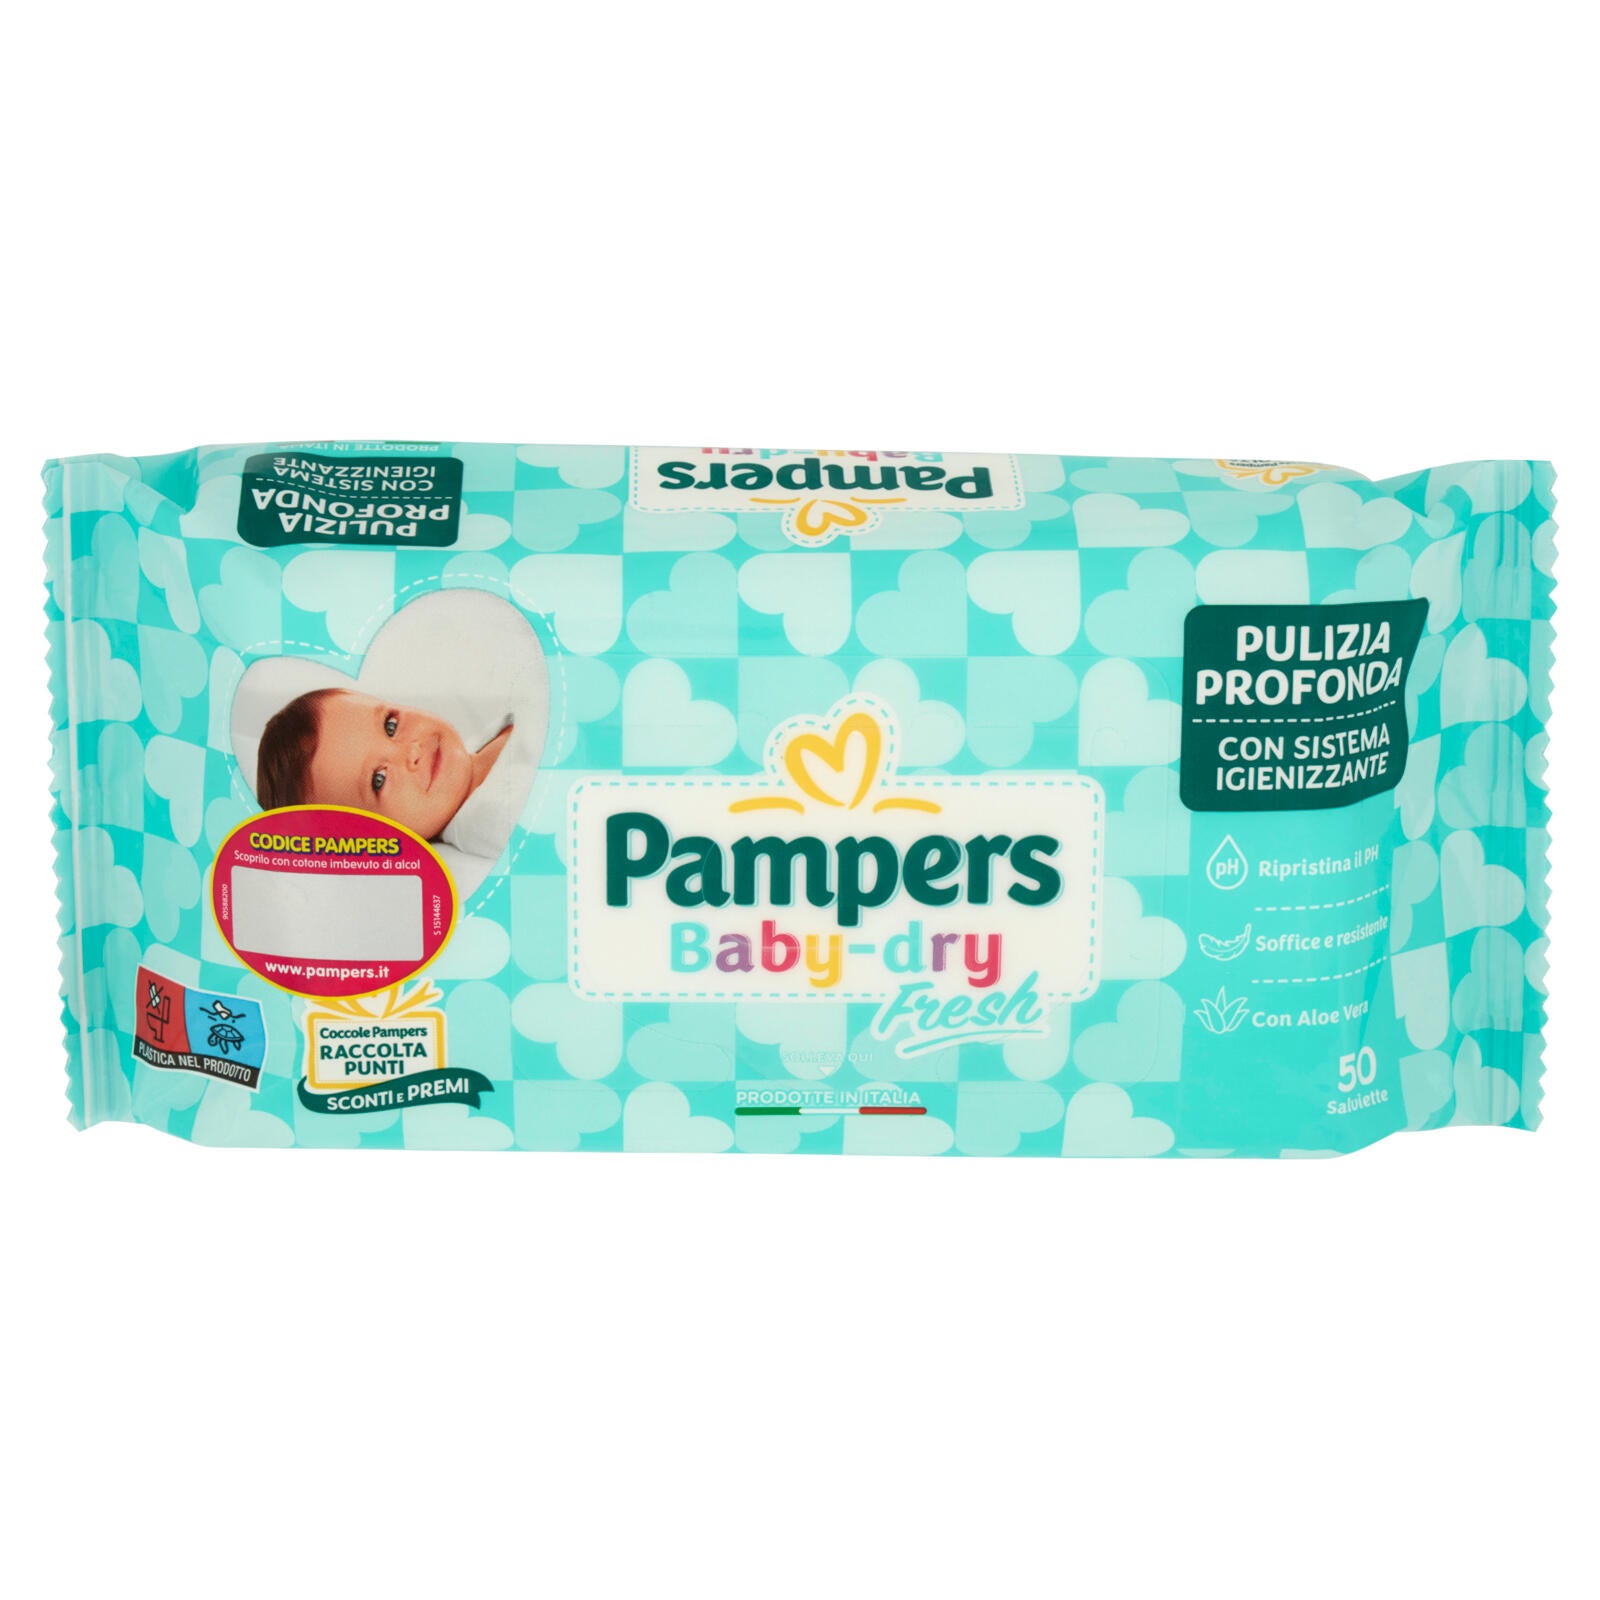 Pampers Baby-dry Fresh Salviette 50 pz